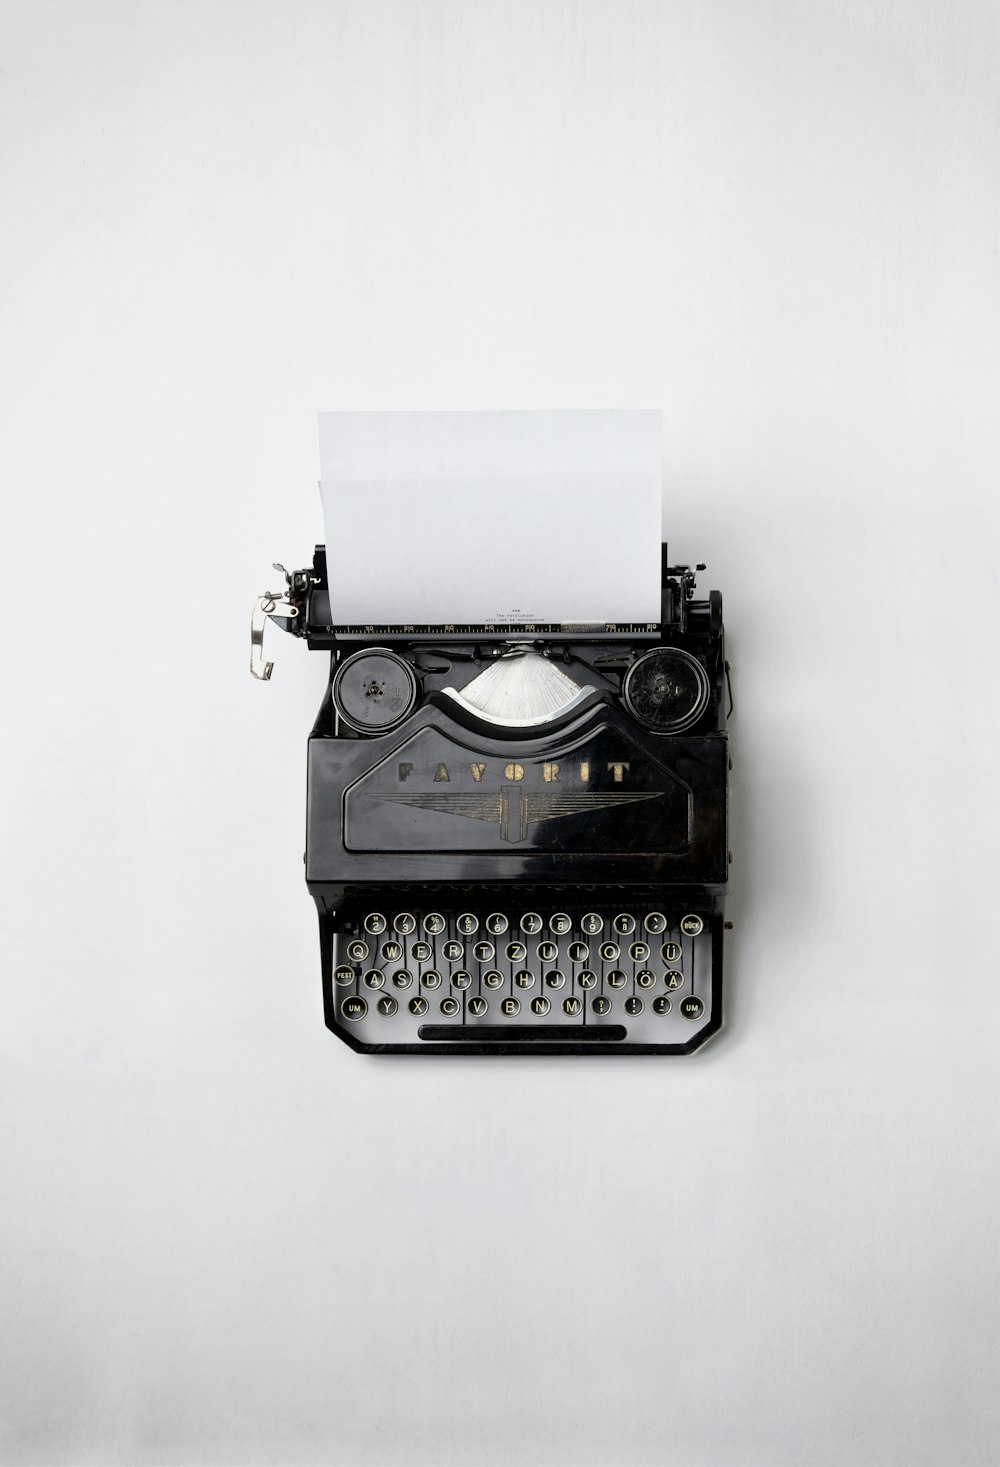 Máquina de escribir Fayorit negra con papel de impresora